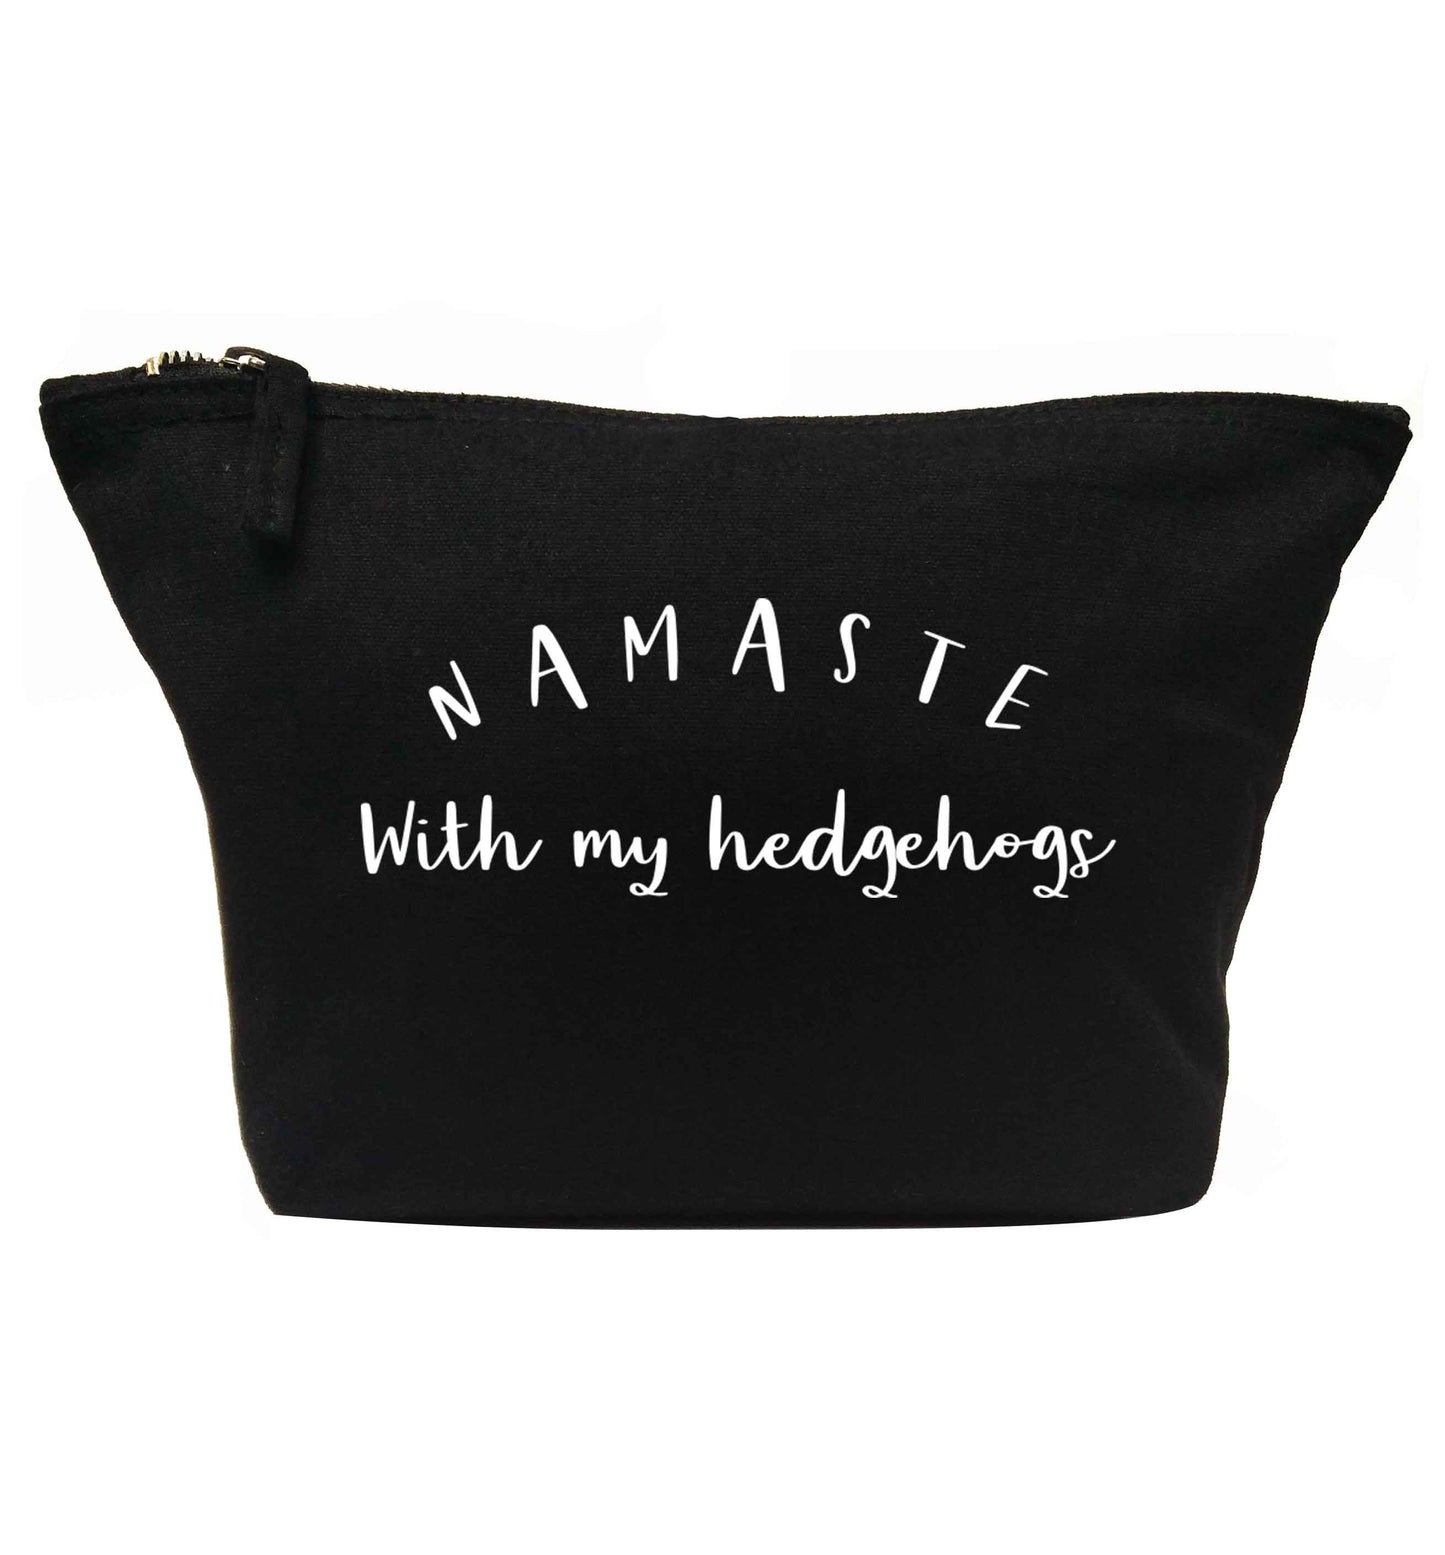 Namaste with my hedgehog | makeup / wash bag